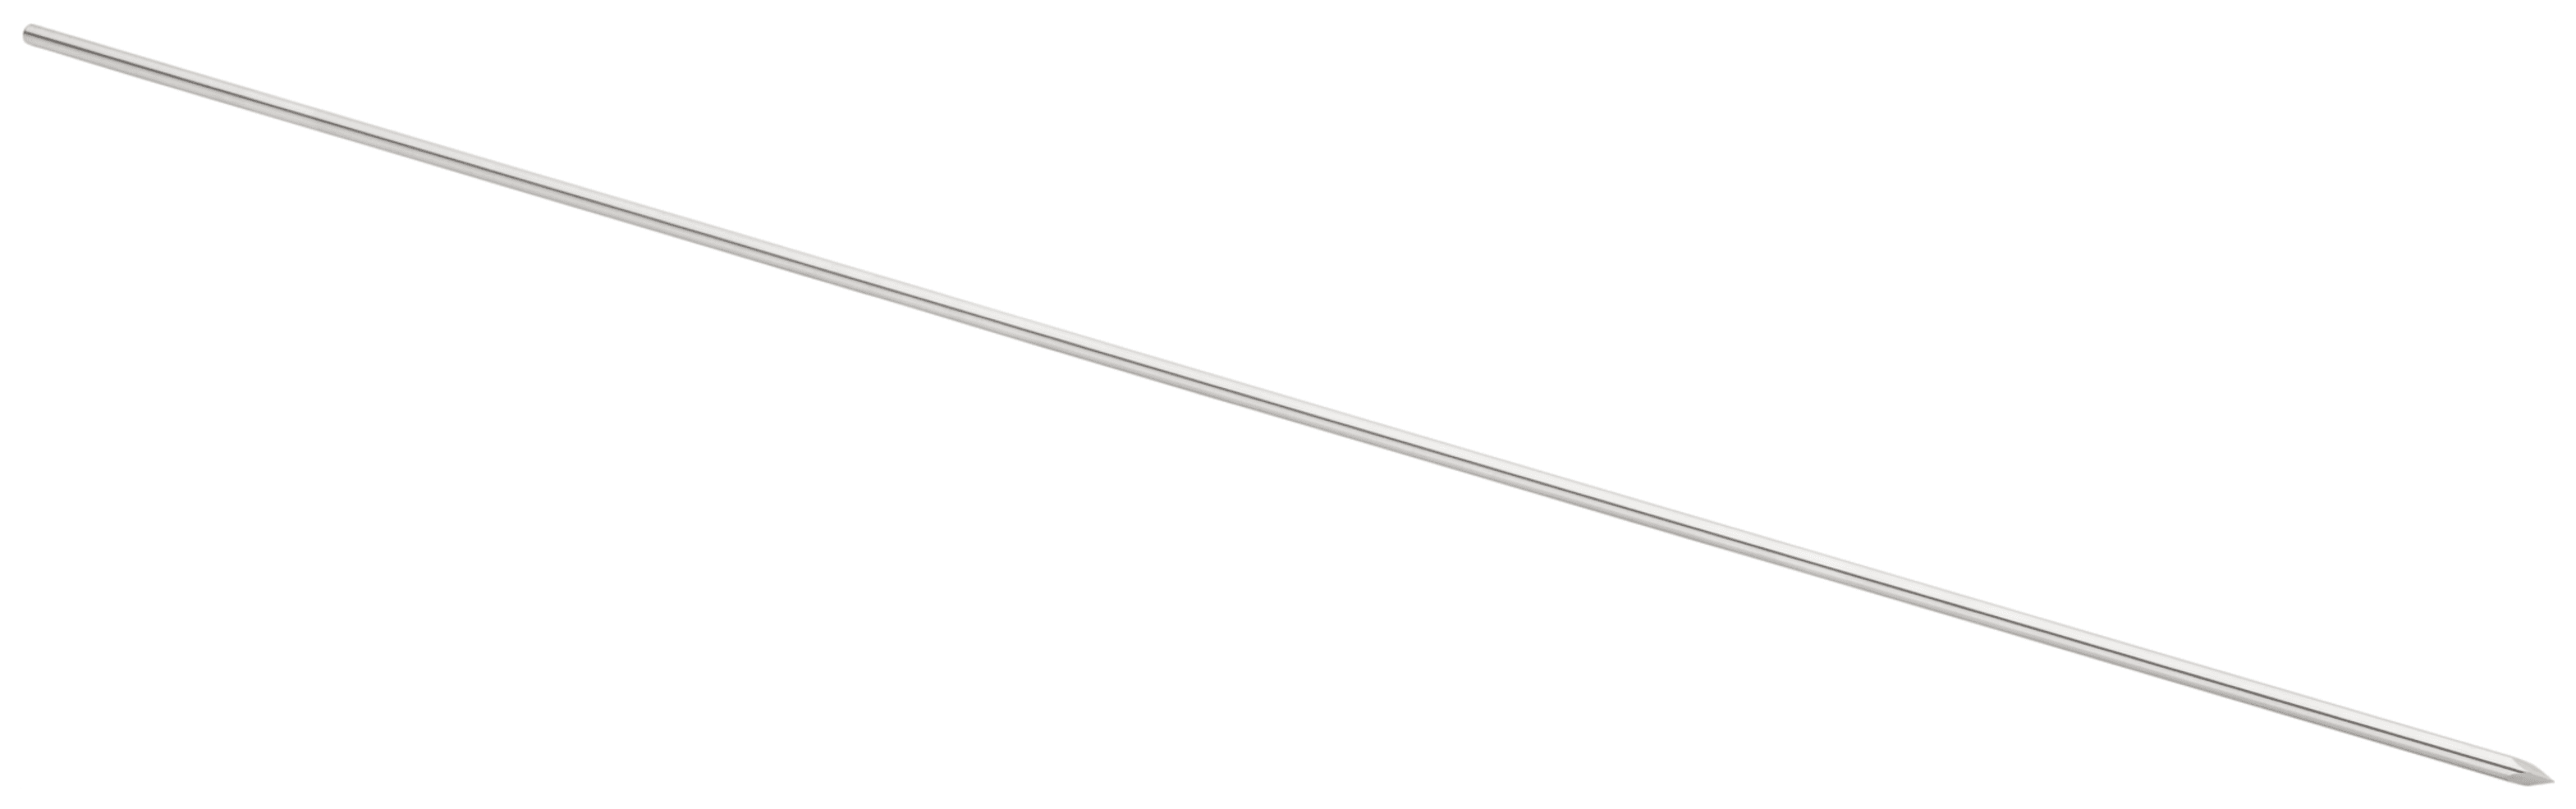 Guidewire, Trocar Tip, 3.0 x 370 mm